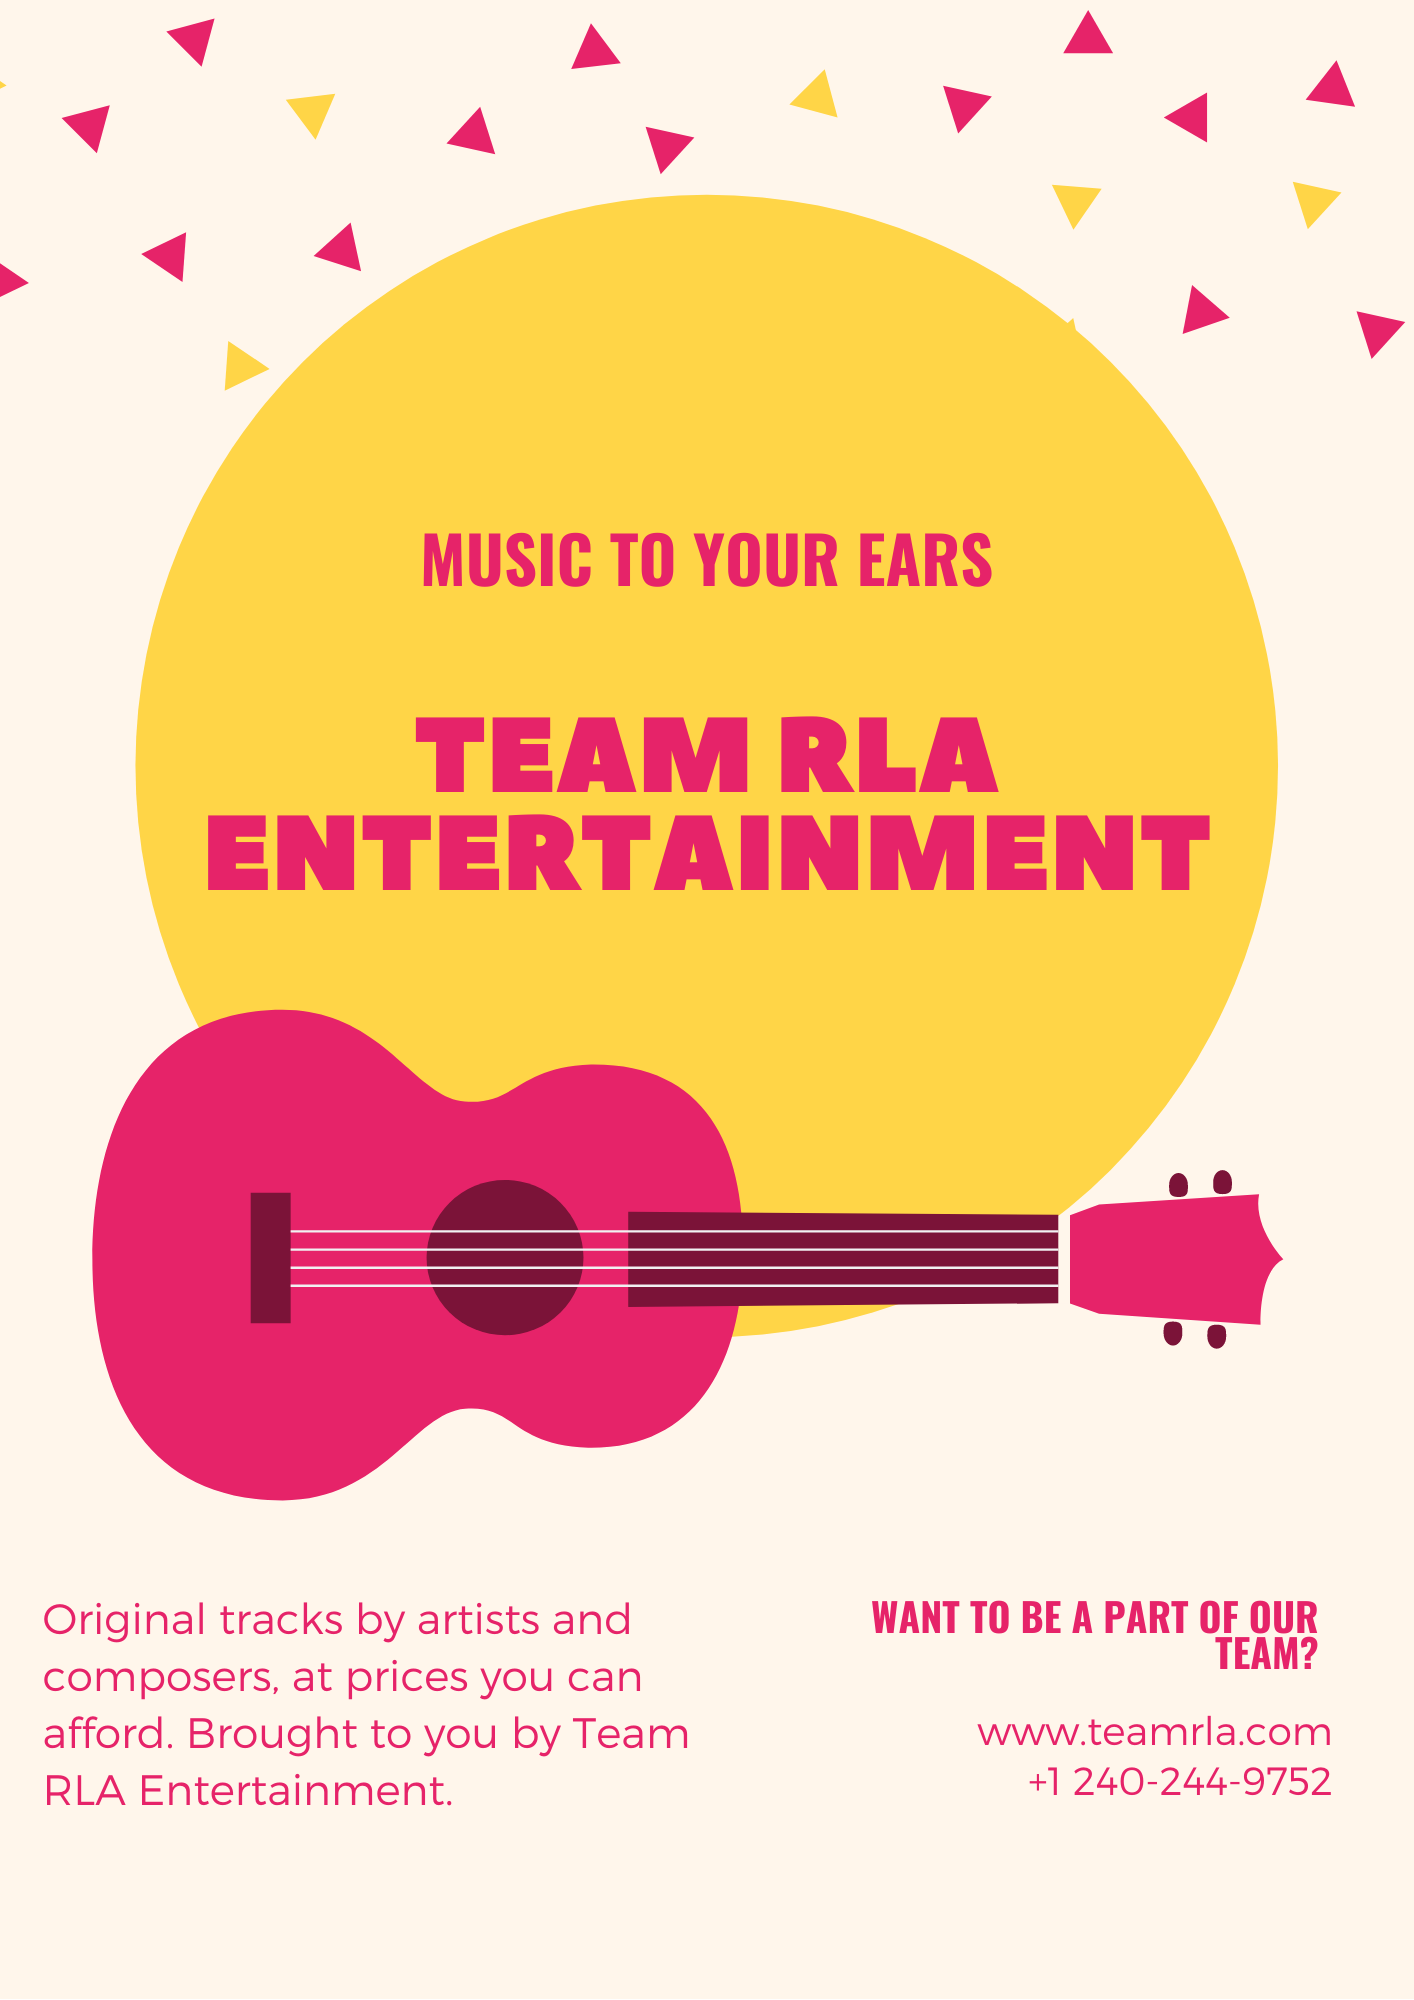 Team RLA Entertainment